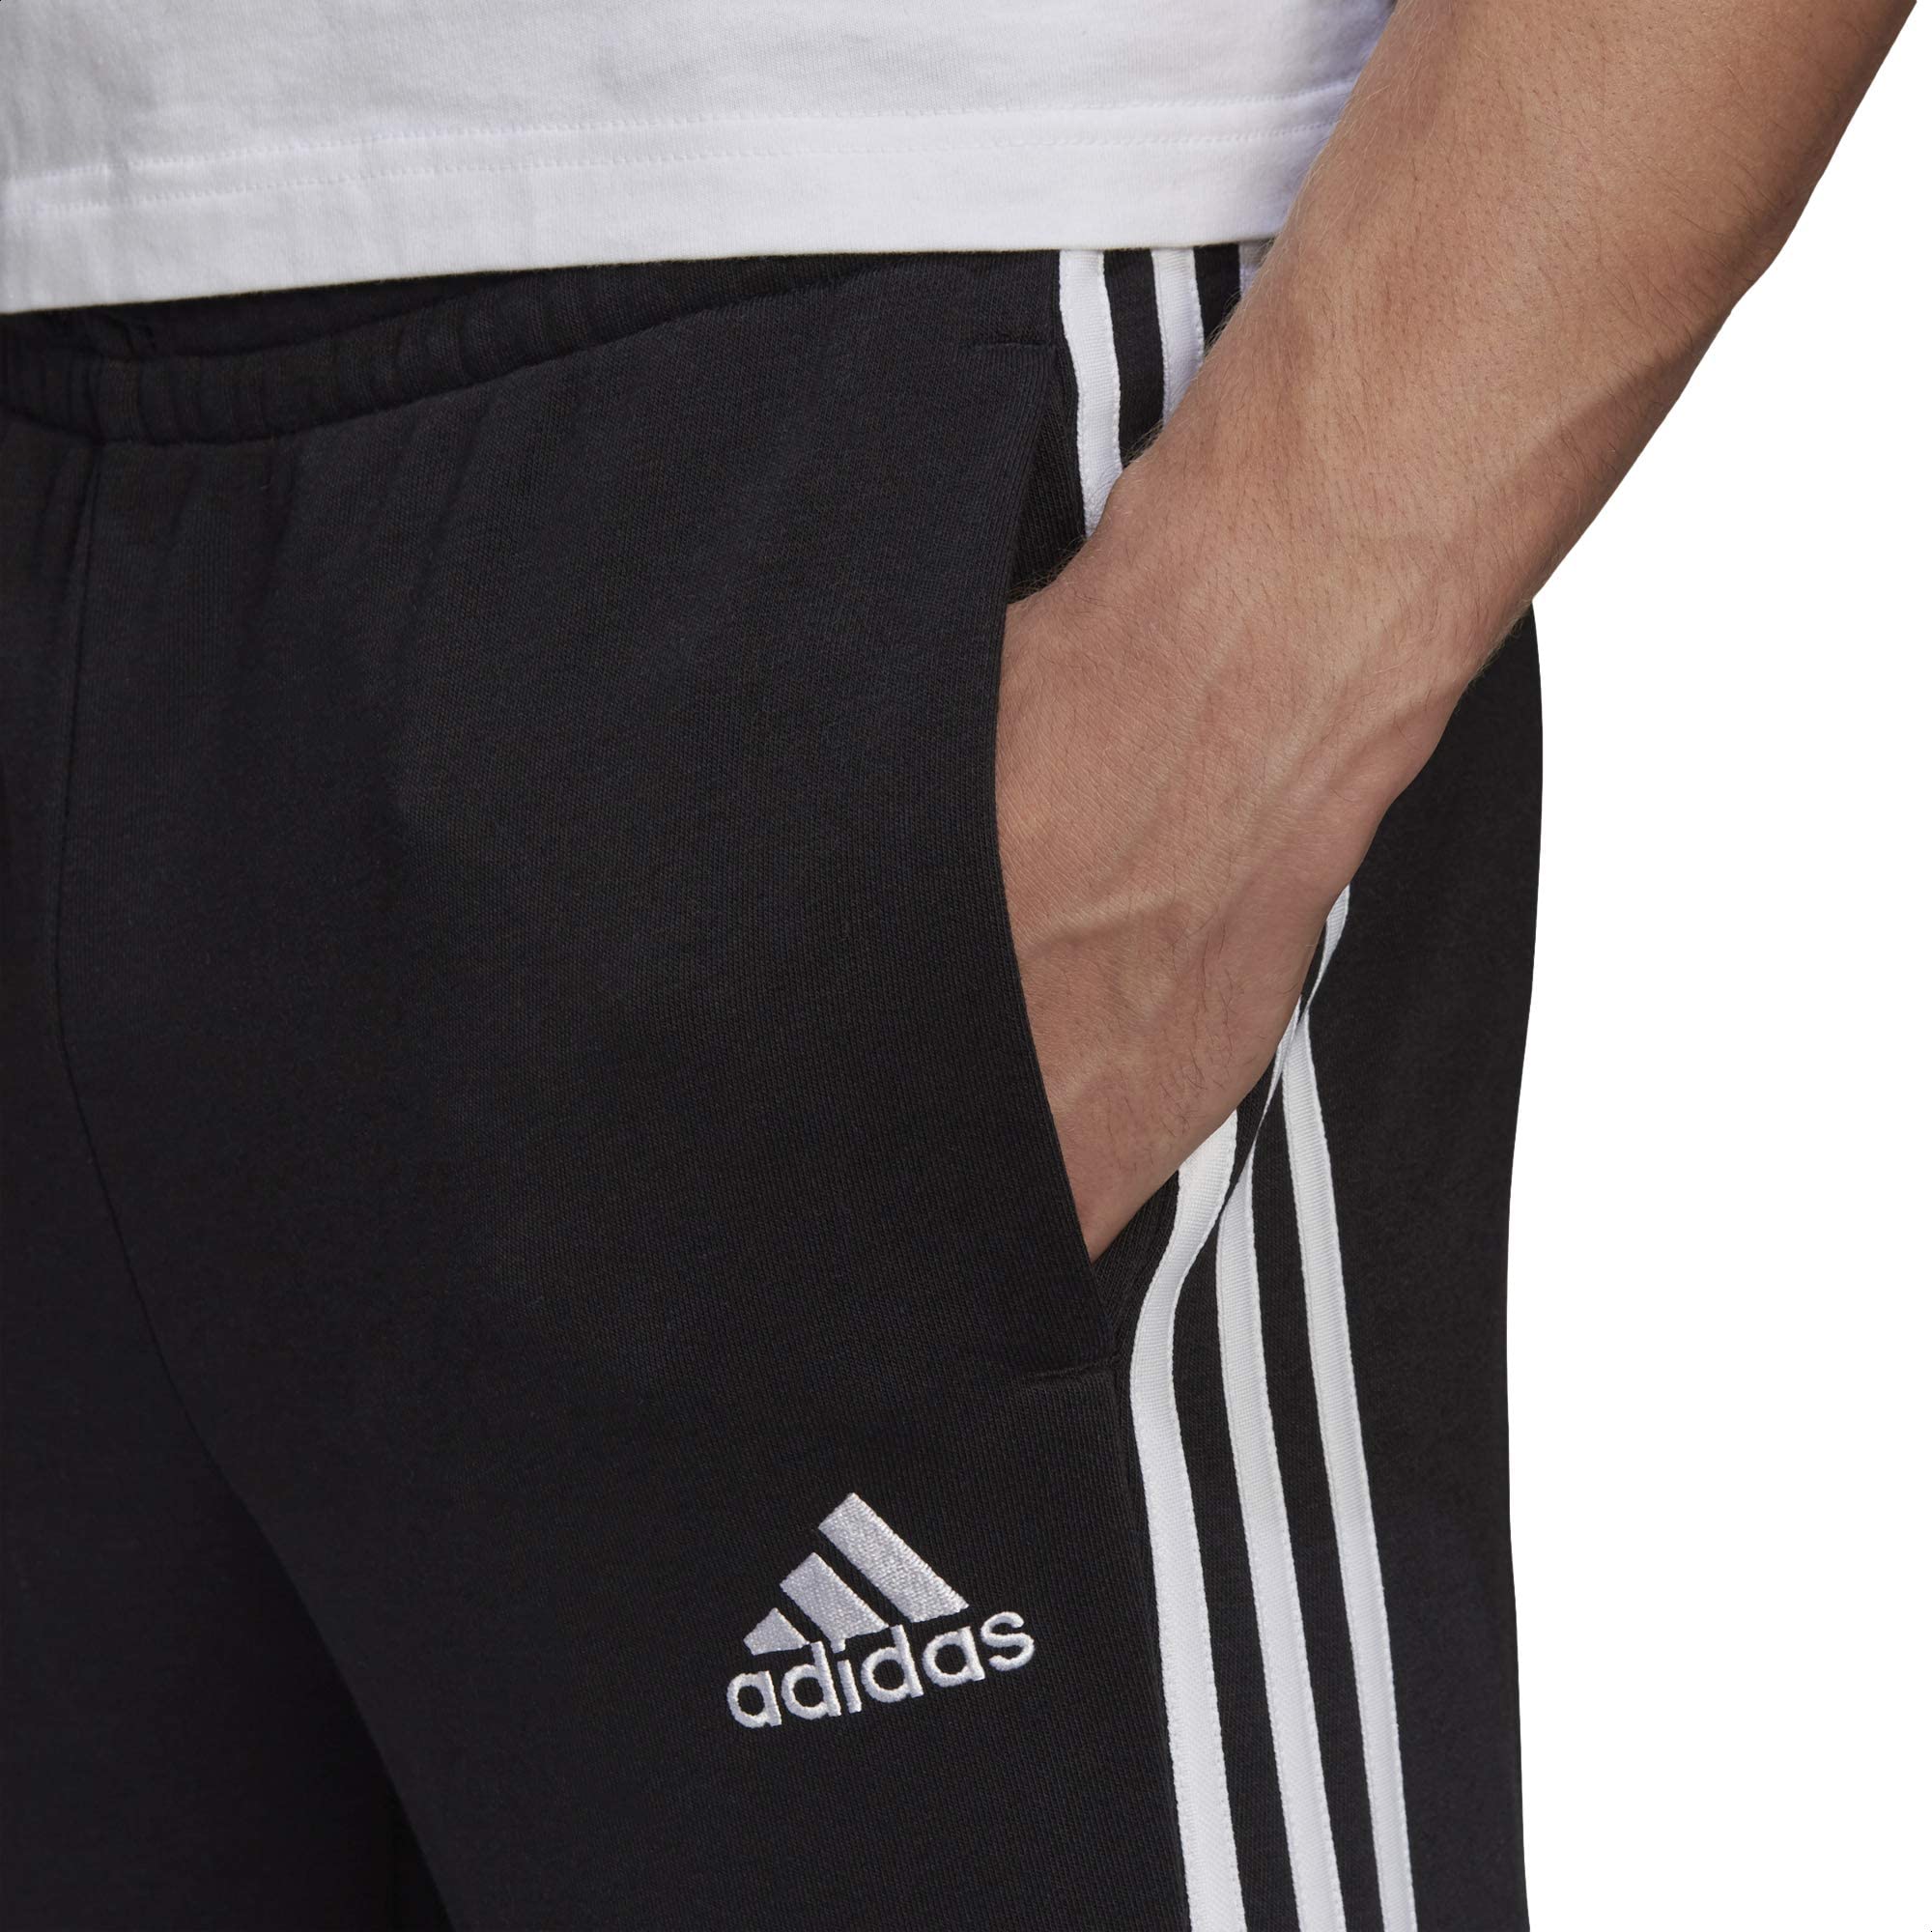 Adidas Men's M 3s Ft Tc Pt Pants Black